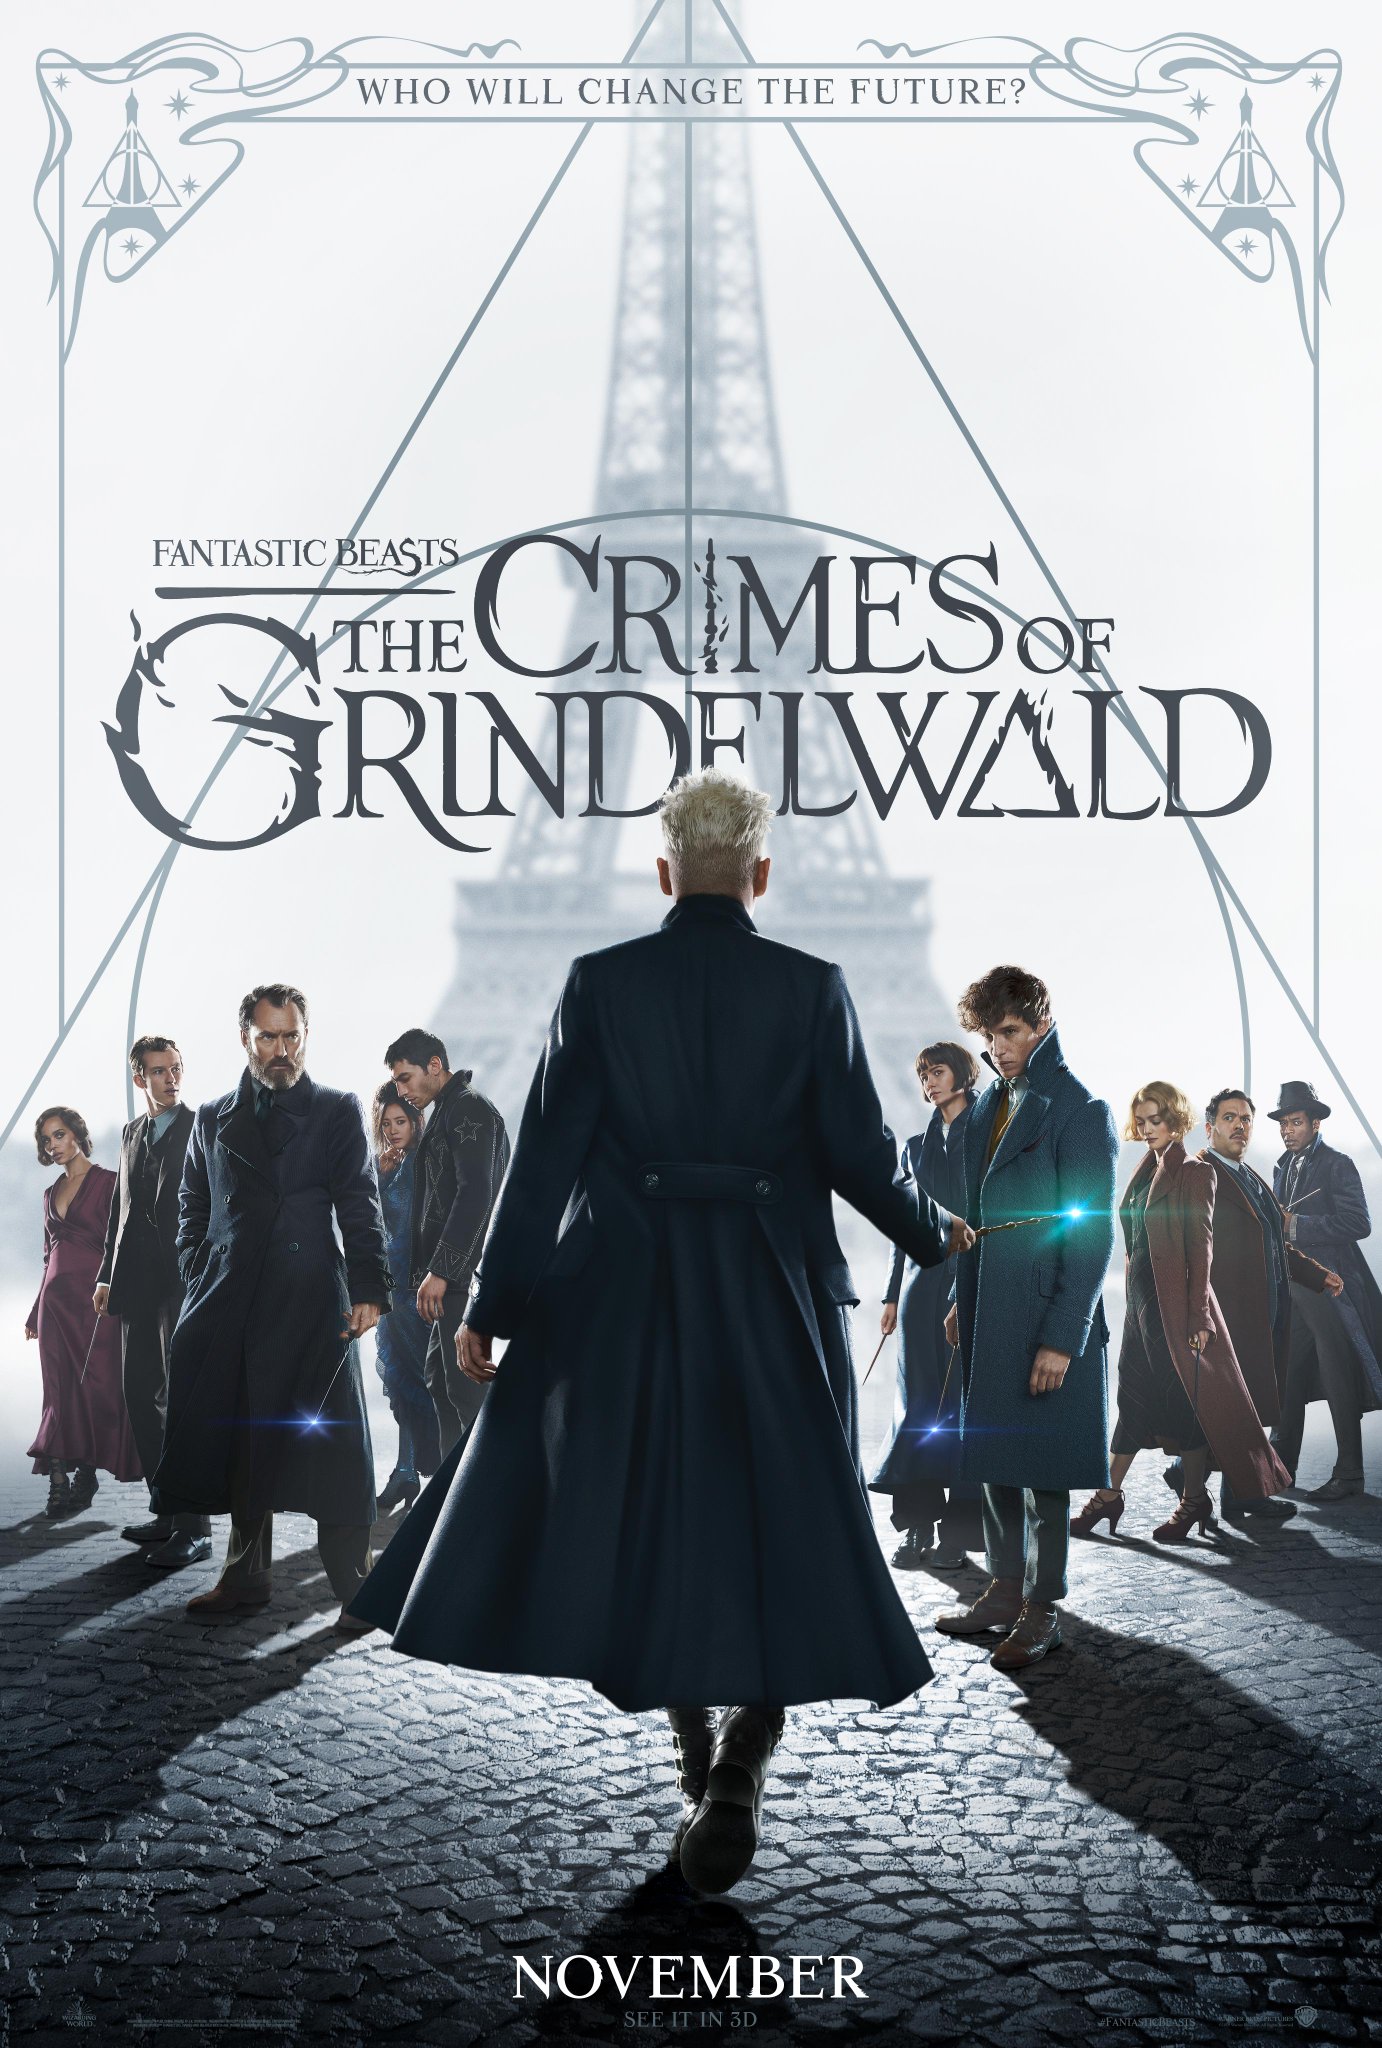 Fandango - Fantastic Beasts: The Crimes of Grindelwald tickets